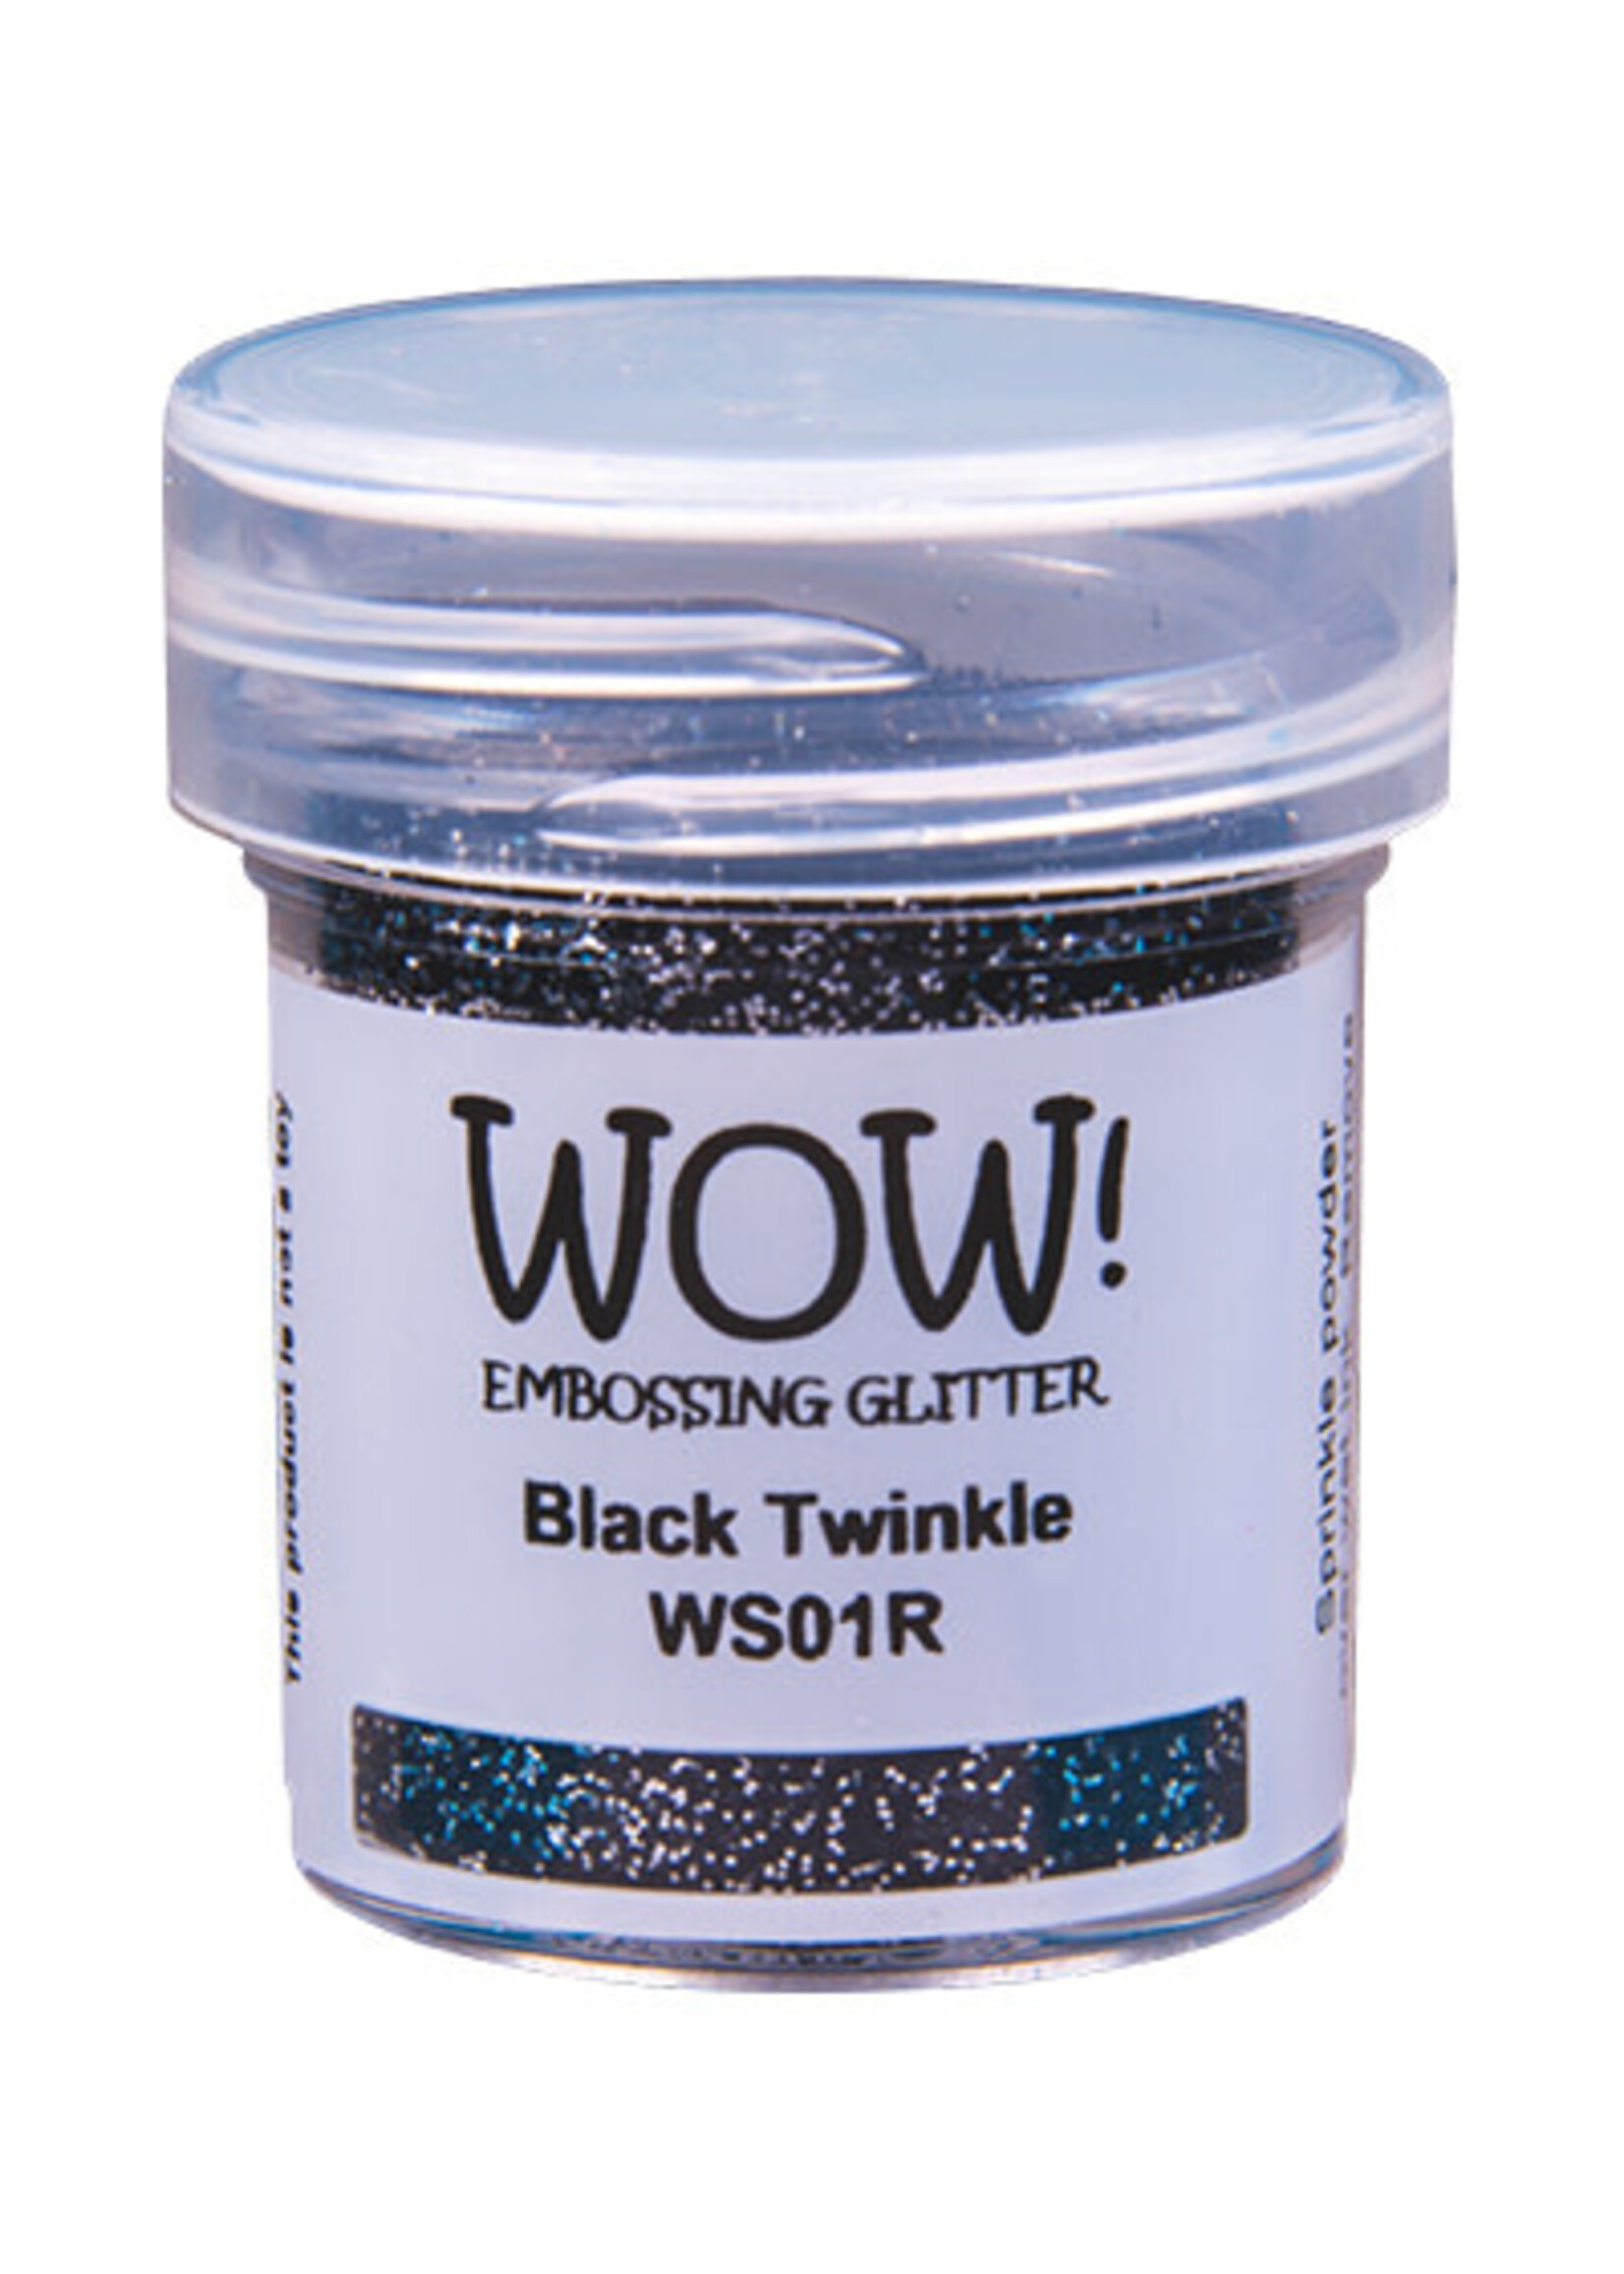 Wow! WS01R - Black Twinkle